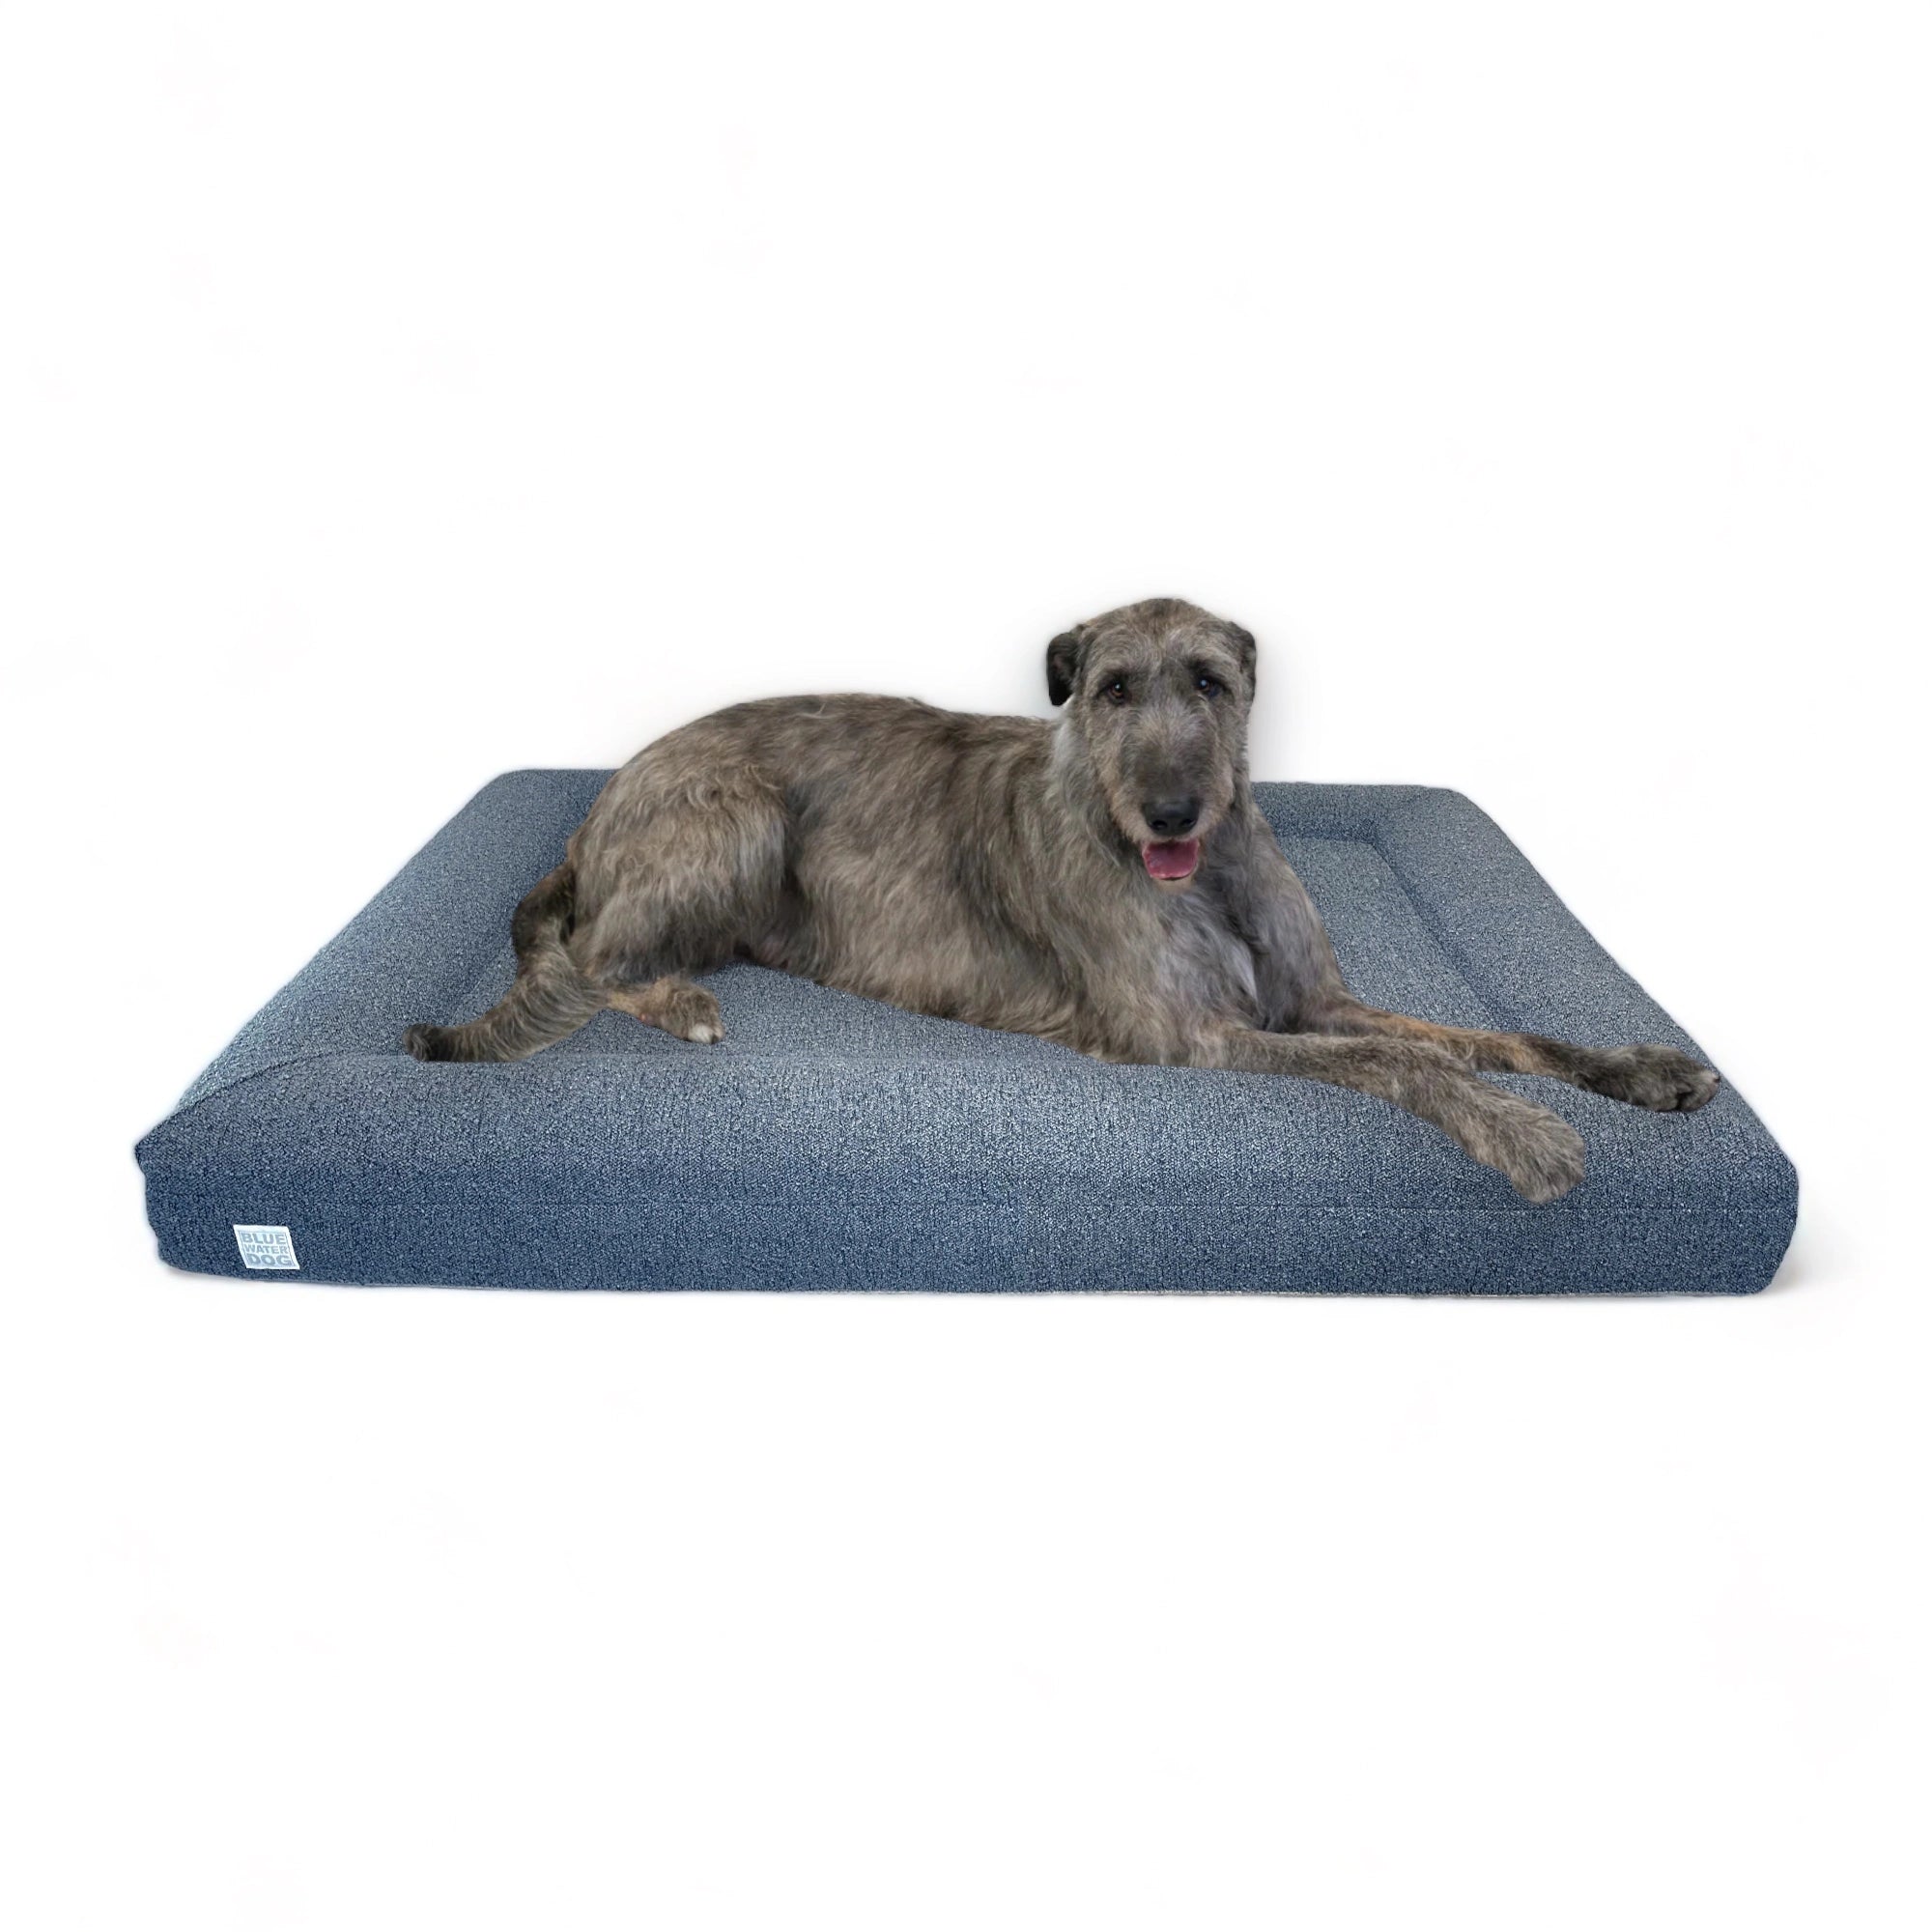 Irish Wolfhound laying on an extra large, blue-colored orthopedic memory foam boucle dog bed.